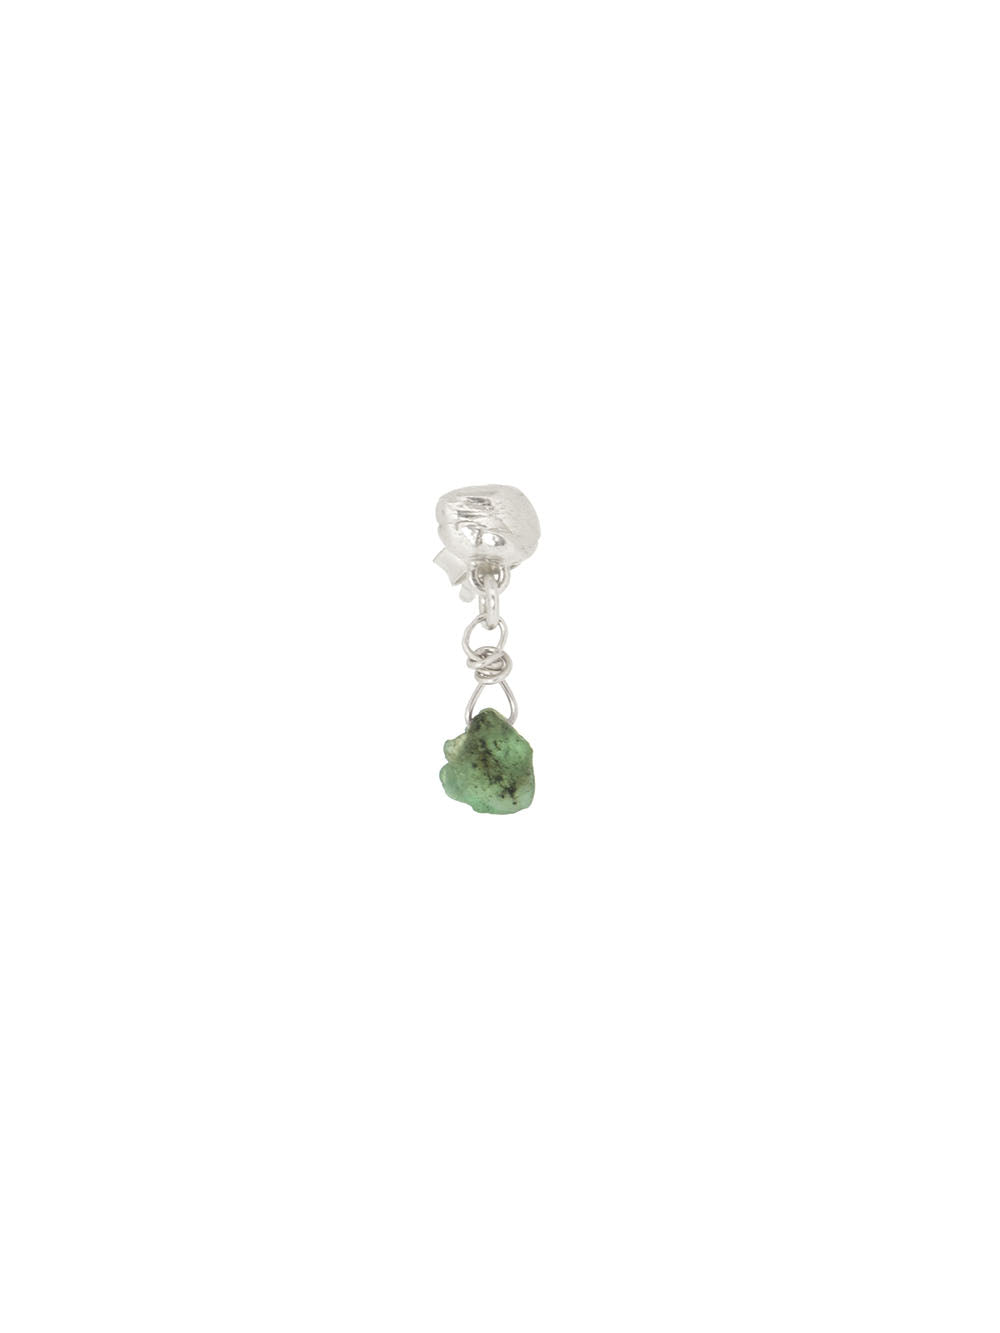 Island stud - Emerald | 925 Sterling Silver